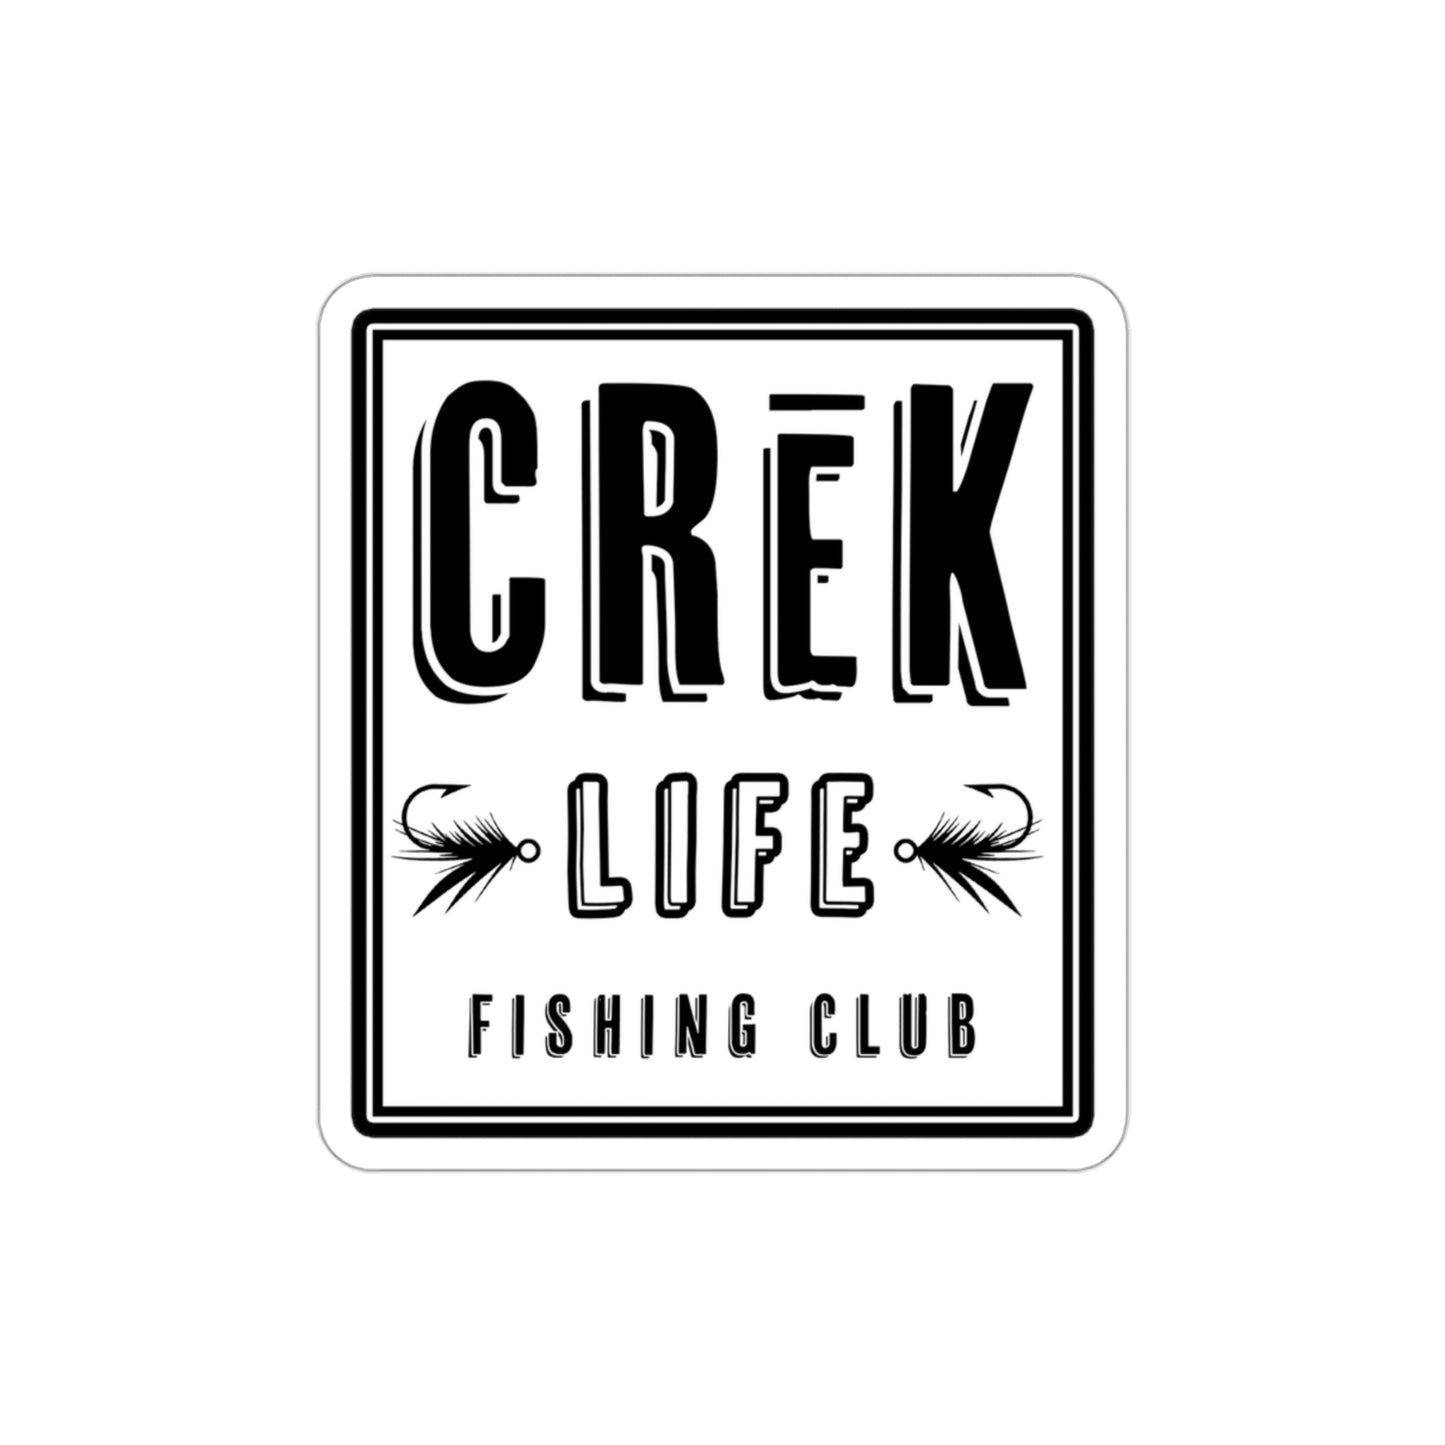 Crēk Life Fishing Club: Die-Cut Stickers